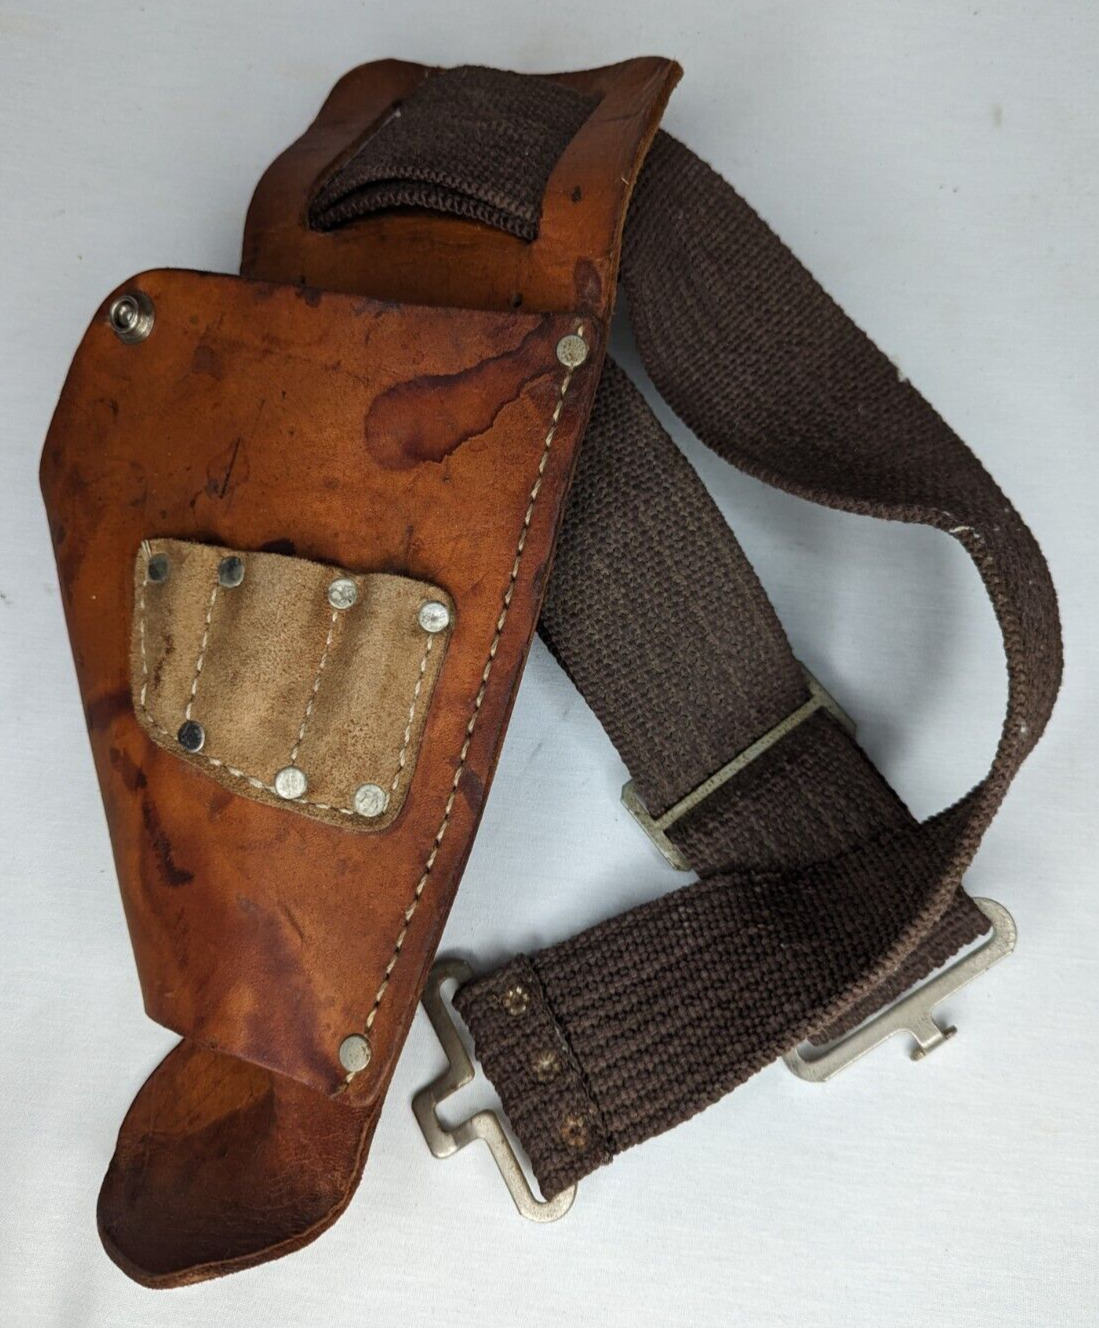 Vintage Military Leather Gun Holster and Belt Combat Belt - Unknown Era